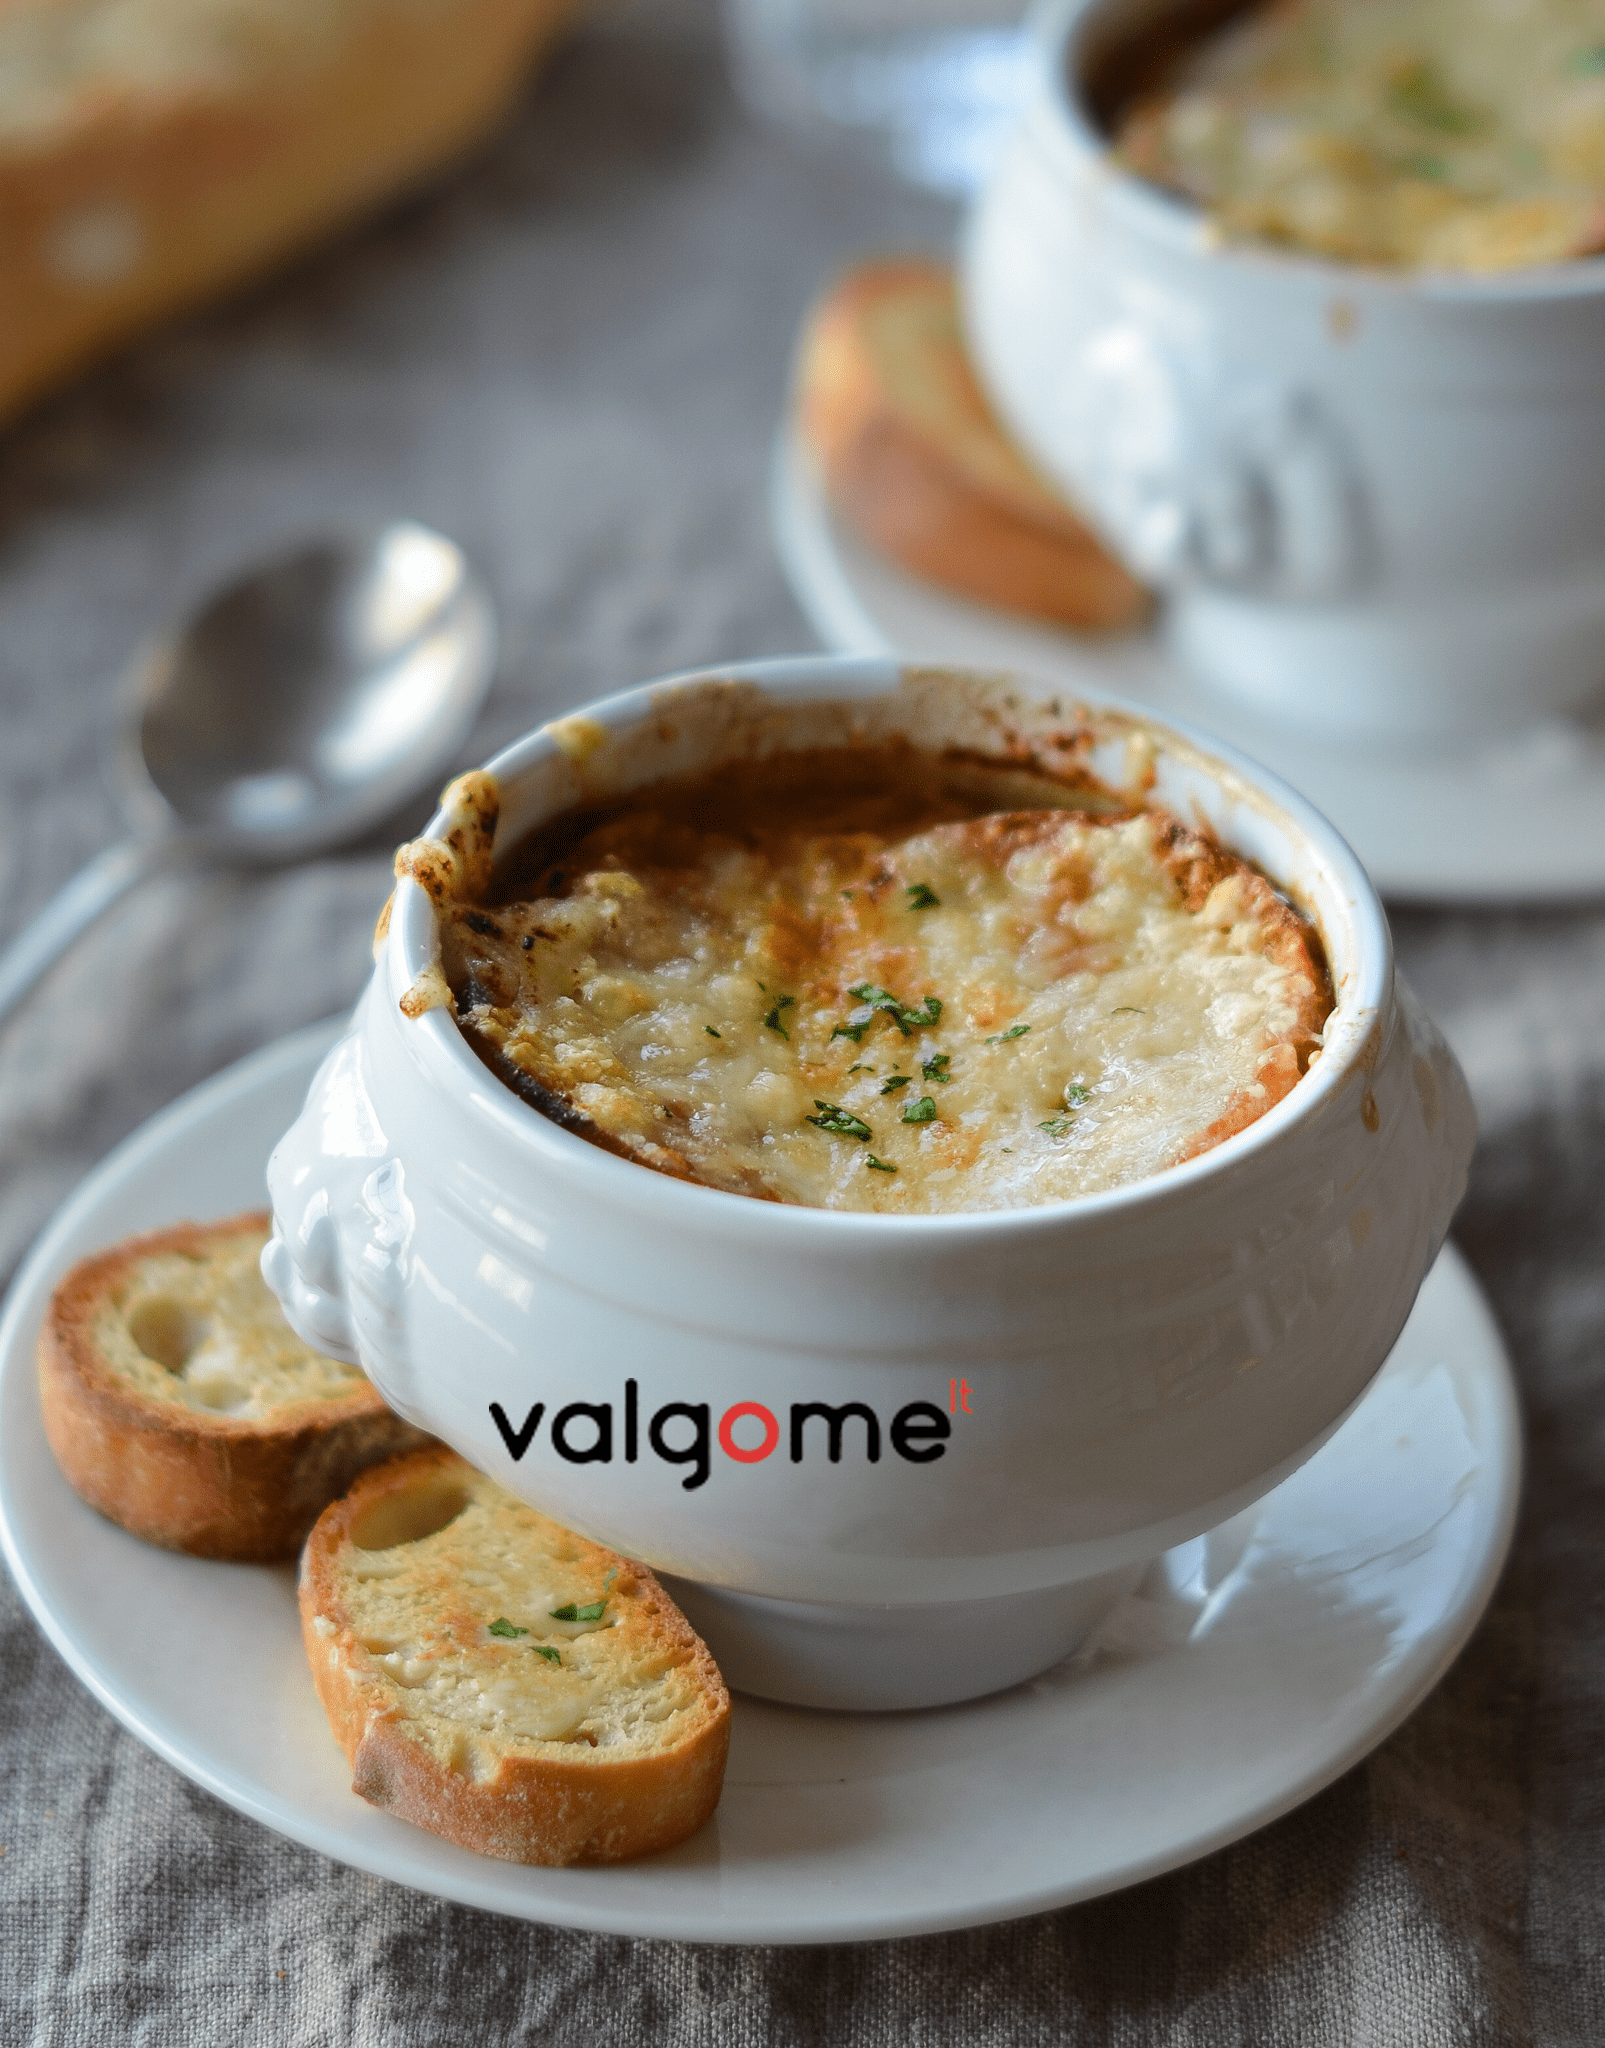 Paprasta prancūziška svogūnų sriuba su suriū ir bulvėmis pagal Beatą